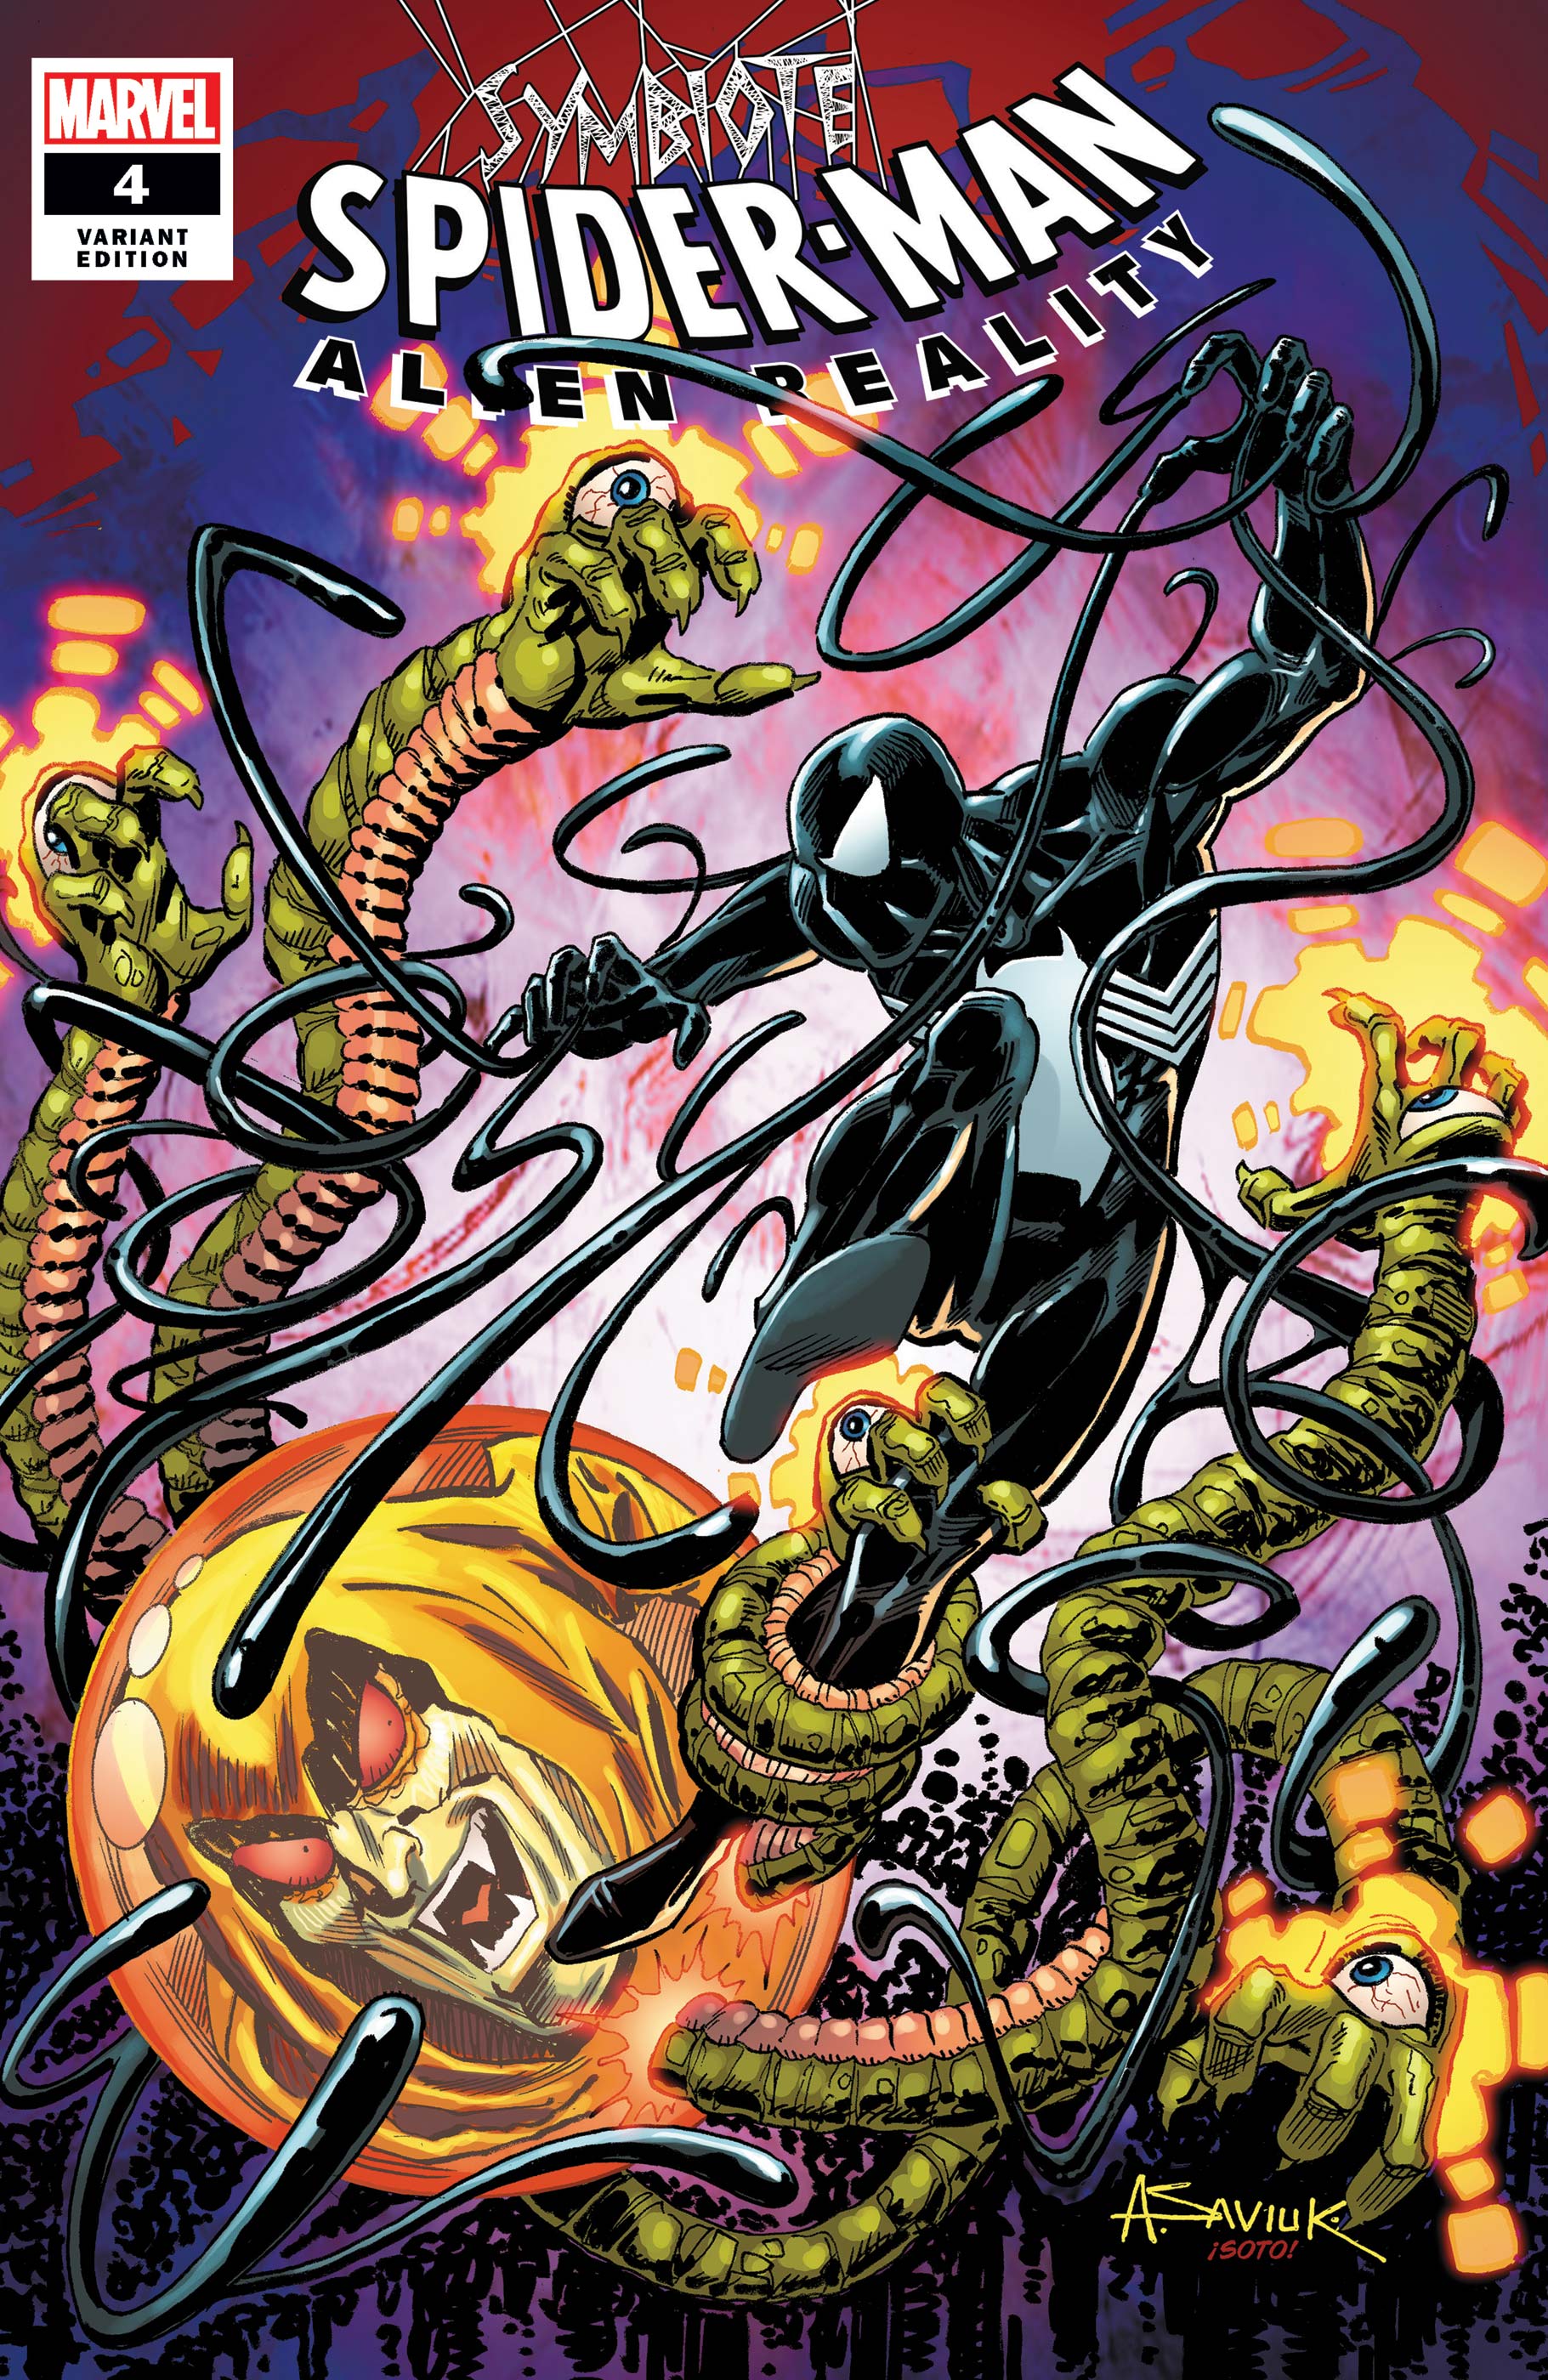 Symbiote Spider-Man: Alien Reality (2019) #4 (Variant)